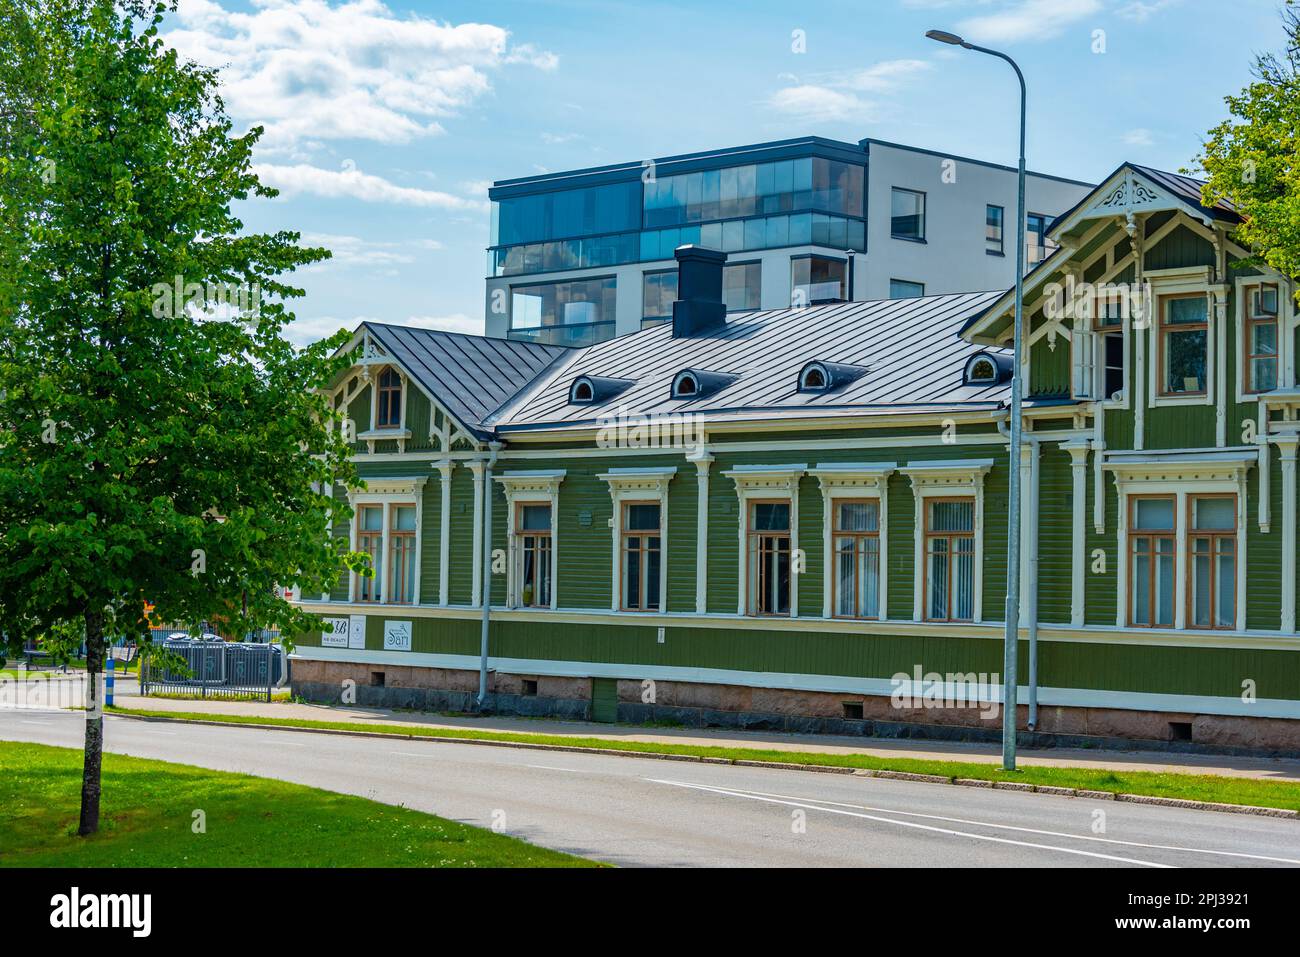 Joensuu, Finland, July 25, 2022: Colorful timber houses in Joensuu, Finland. Stock Photo